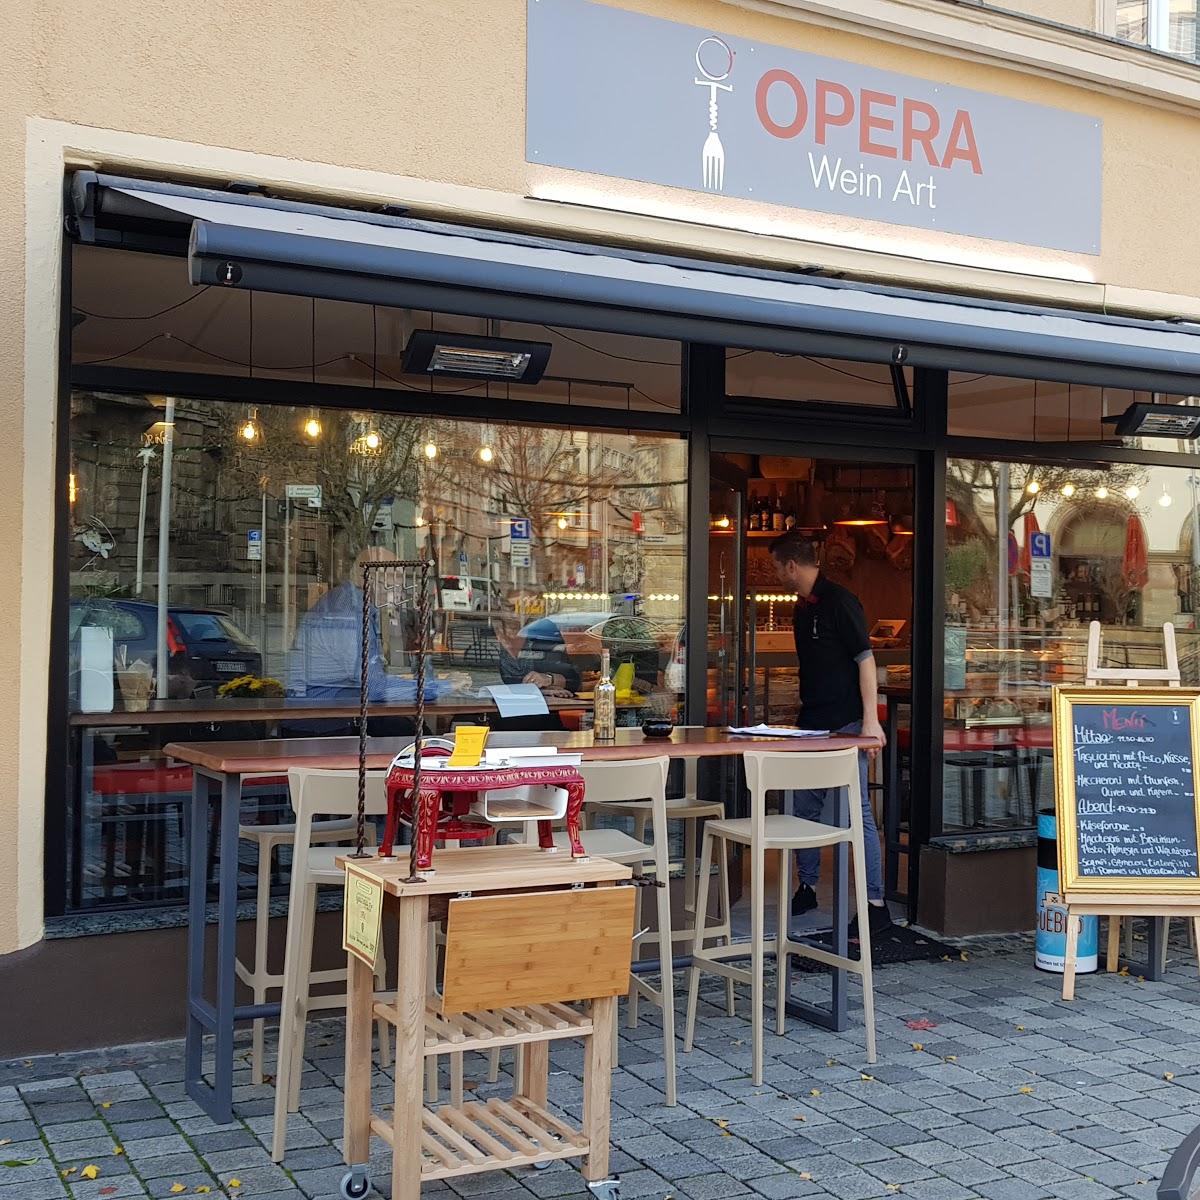 Restaurant "Eis Opera Bayreuth" in Bayreuth